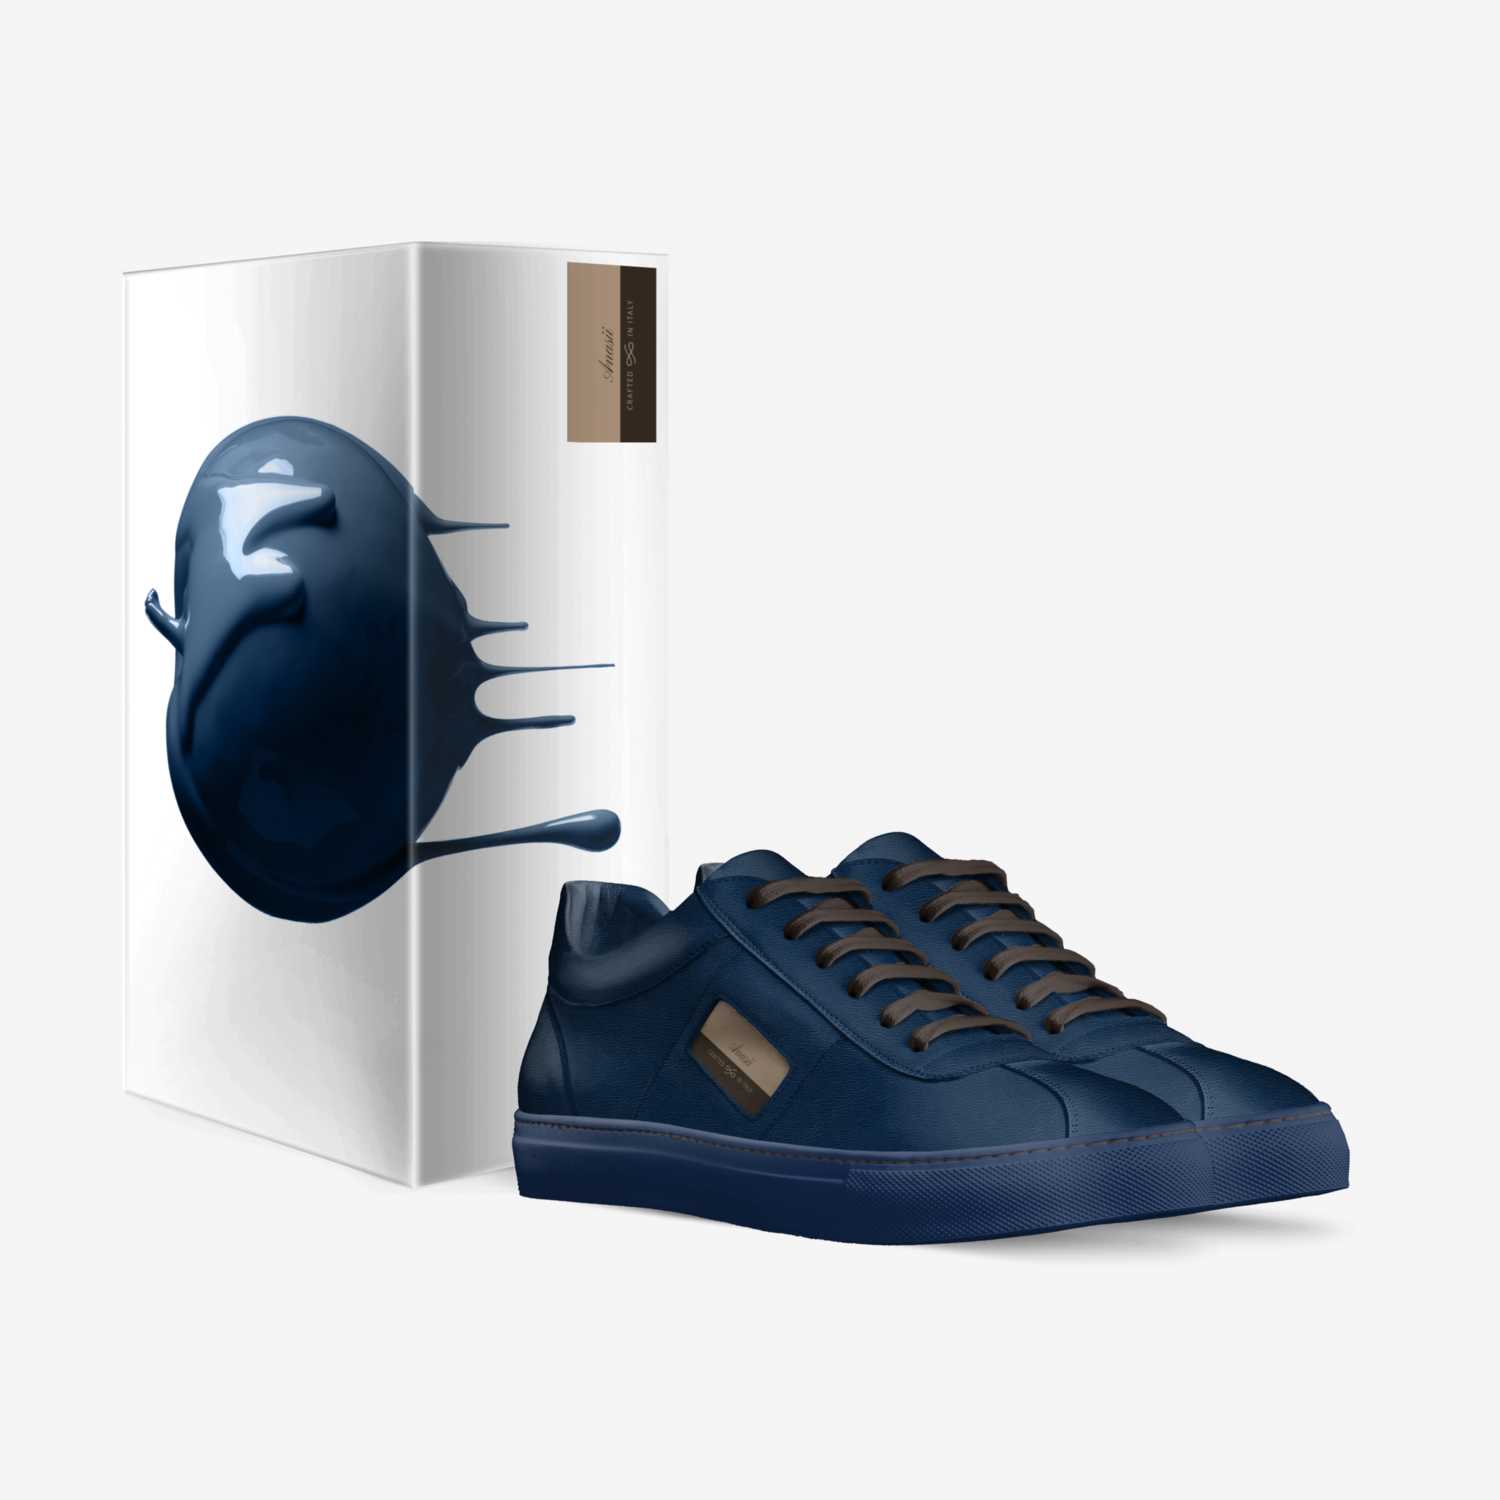 Anasii custom made in Italy shoes by Dana Wilson | Box view